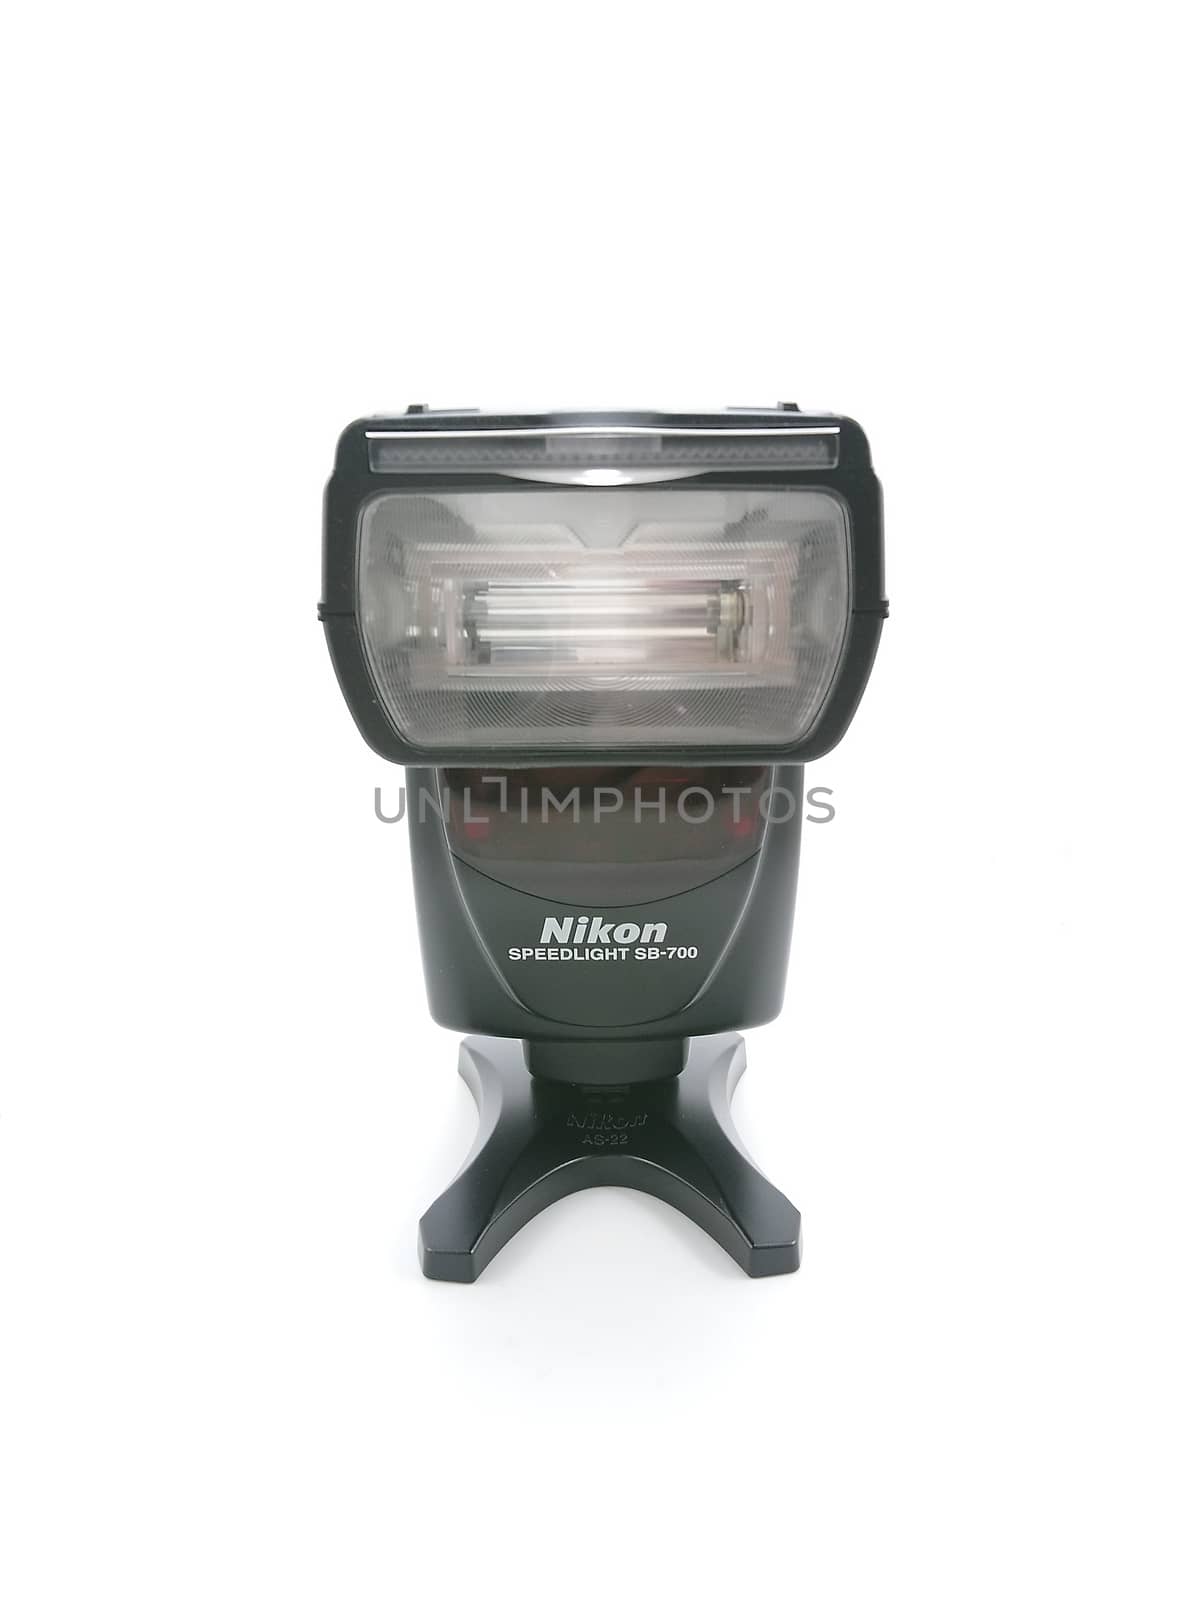 Nikon sb 700 flash speedlight in Manila, Philippines by imwaltersy